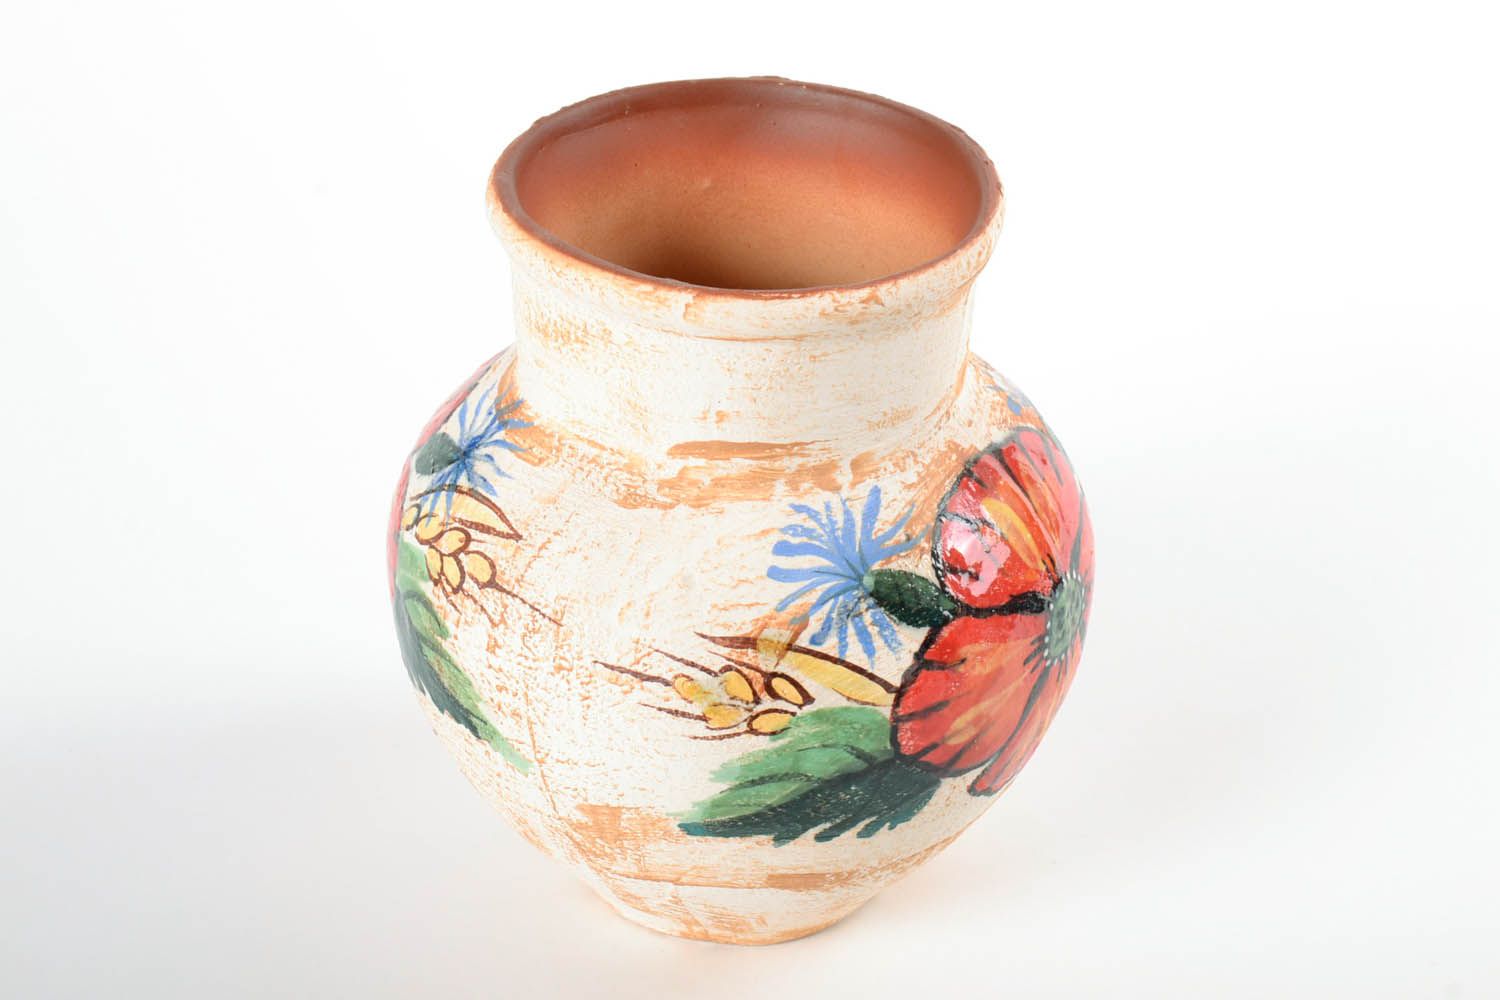 30 oz ceramic handmade village-style milk jug with floral décor 2 lb photo 4